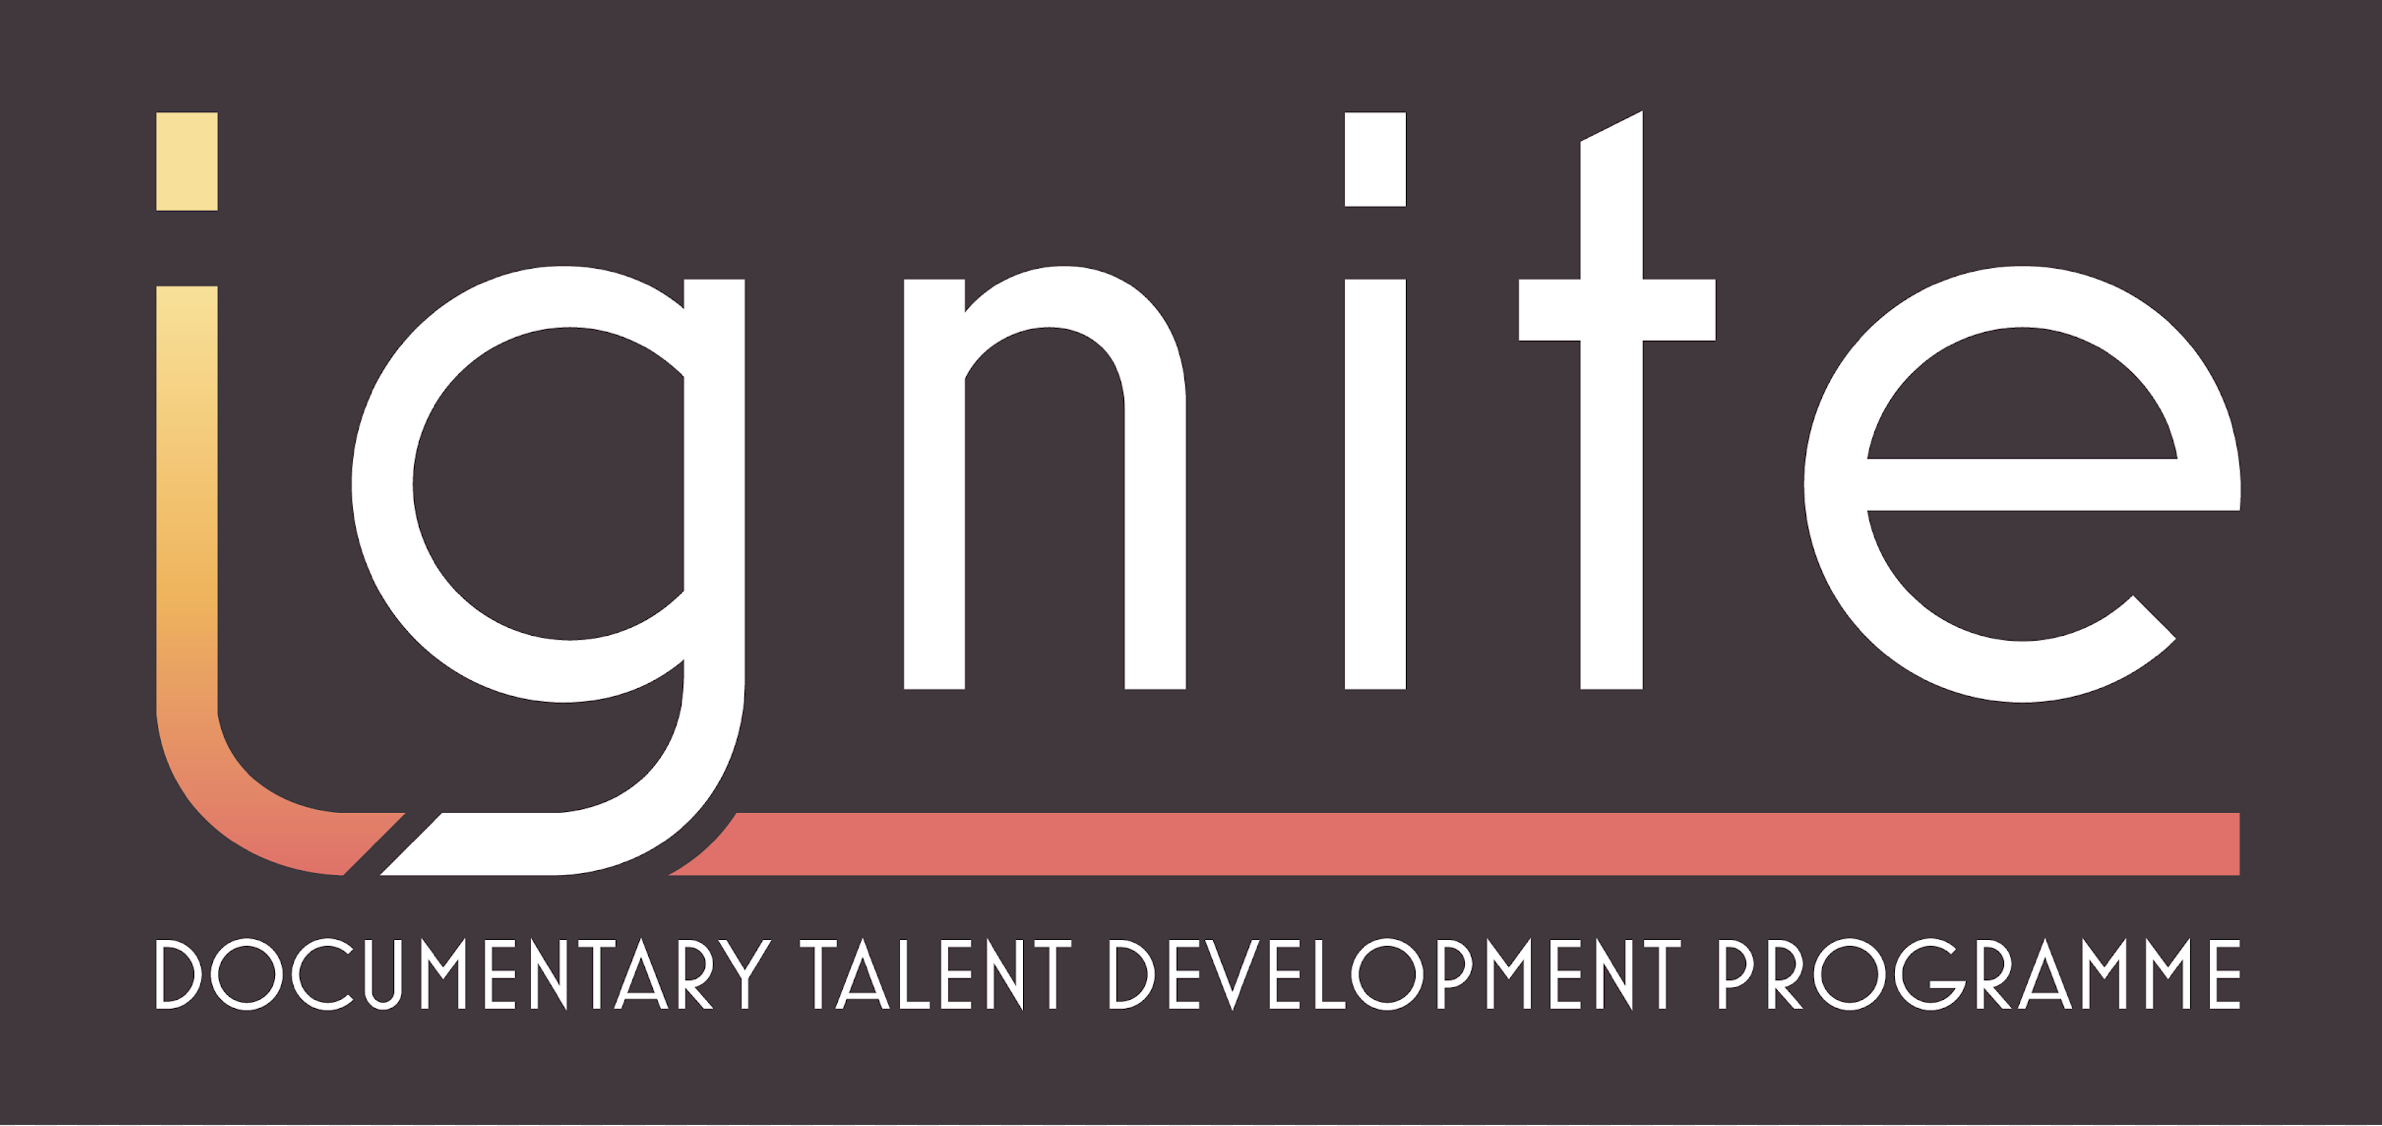 Ignite: Documentary Talent Development Programme 4